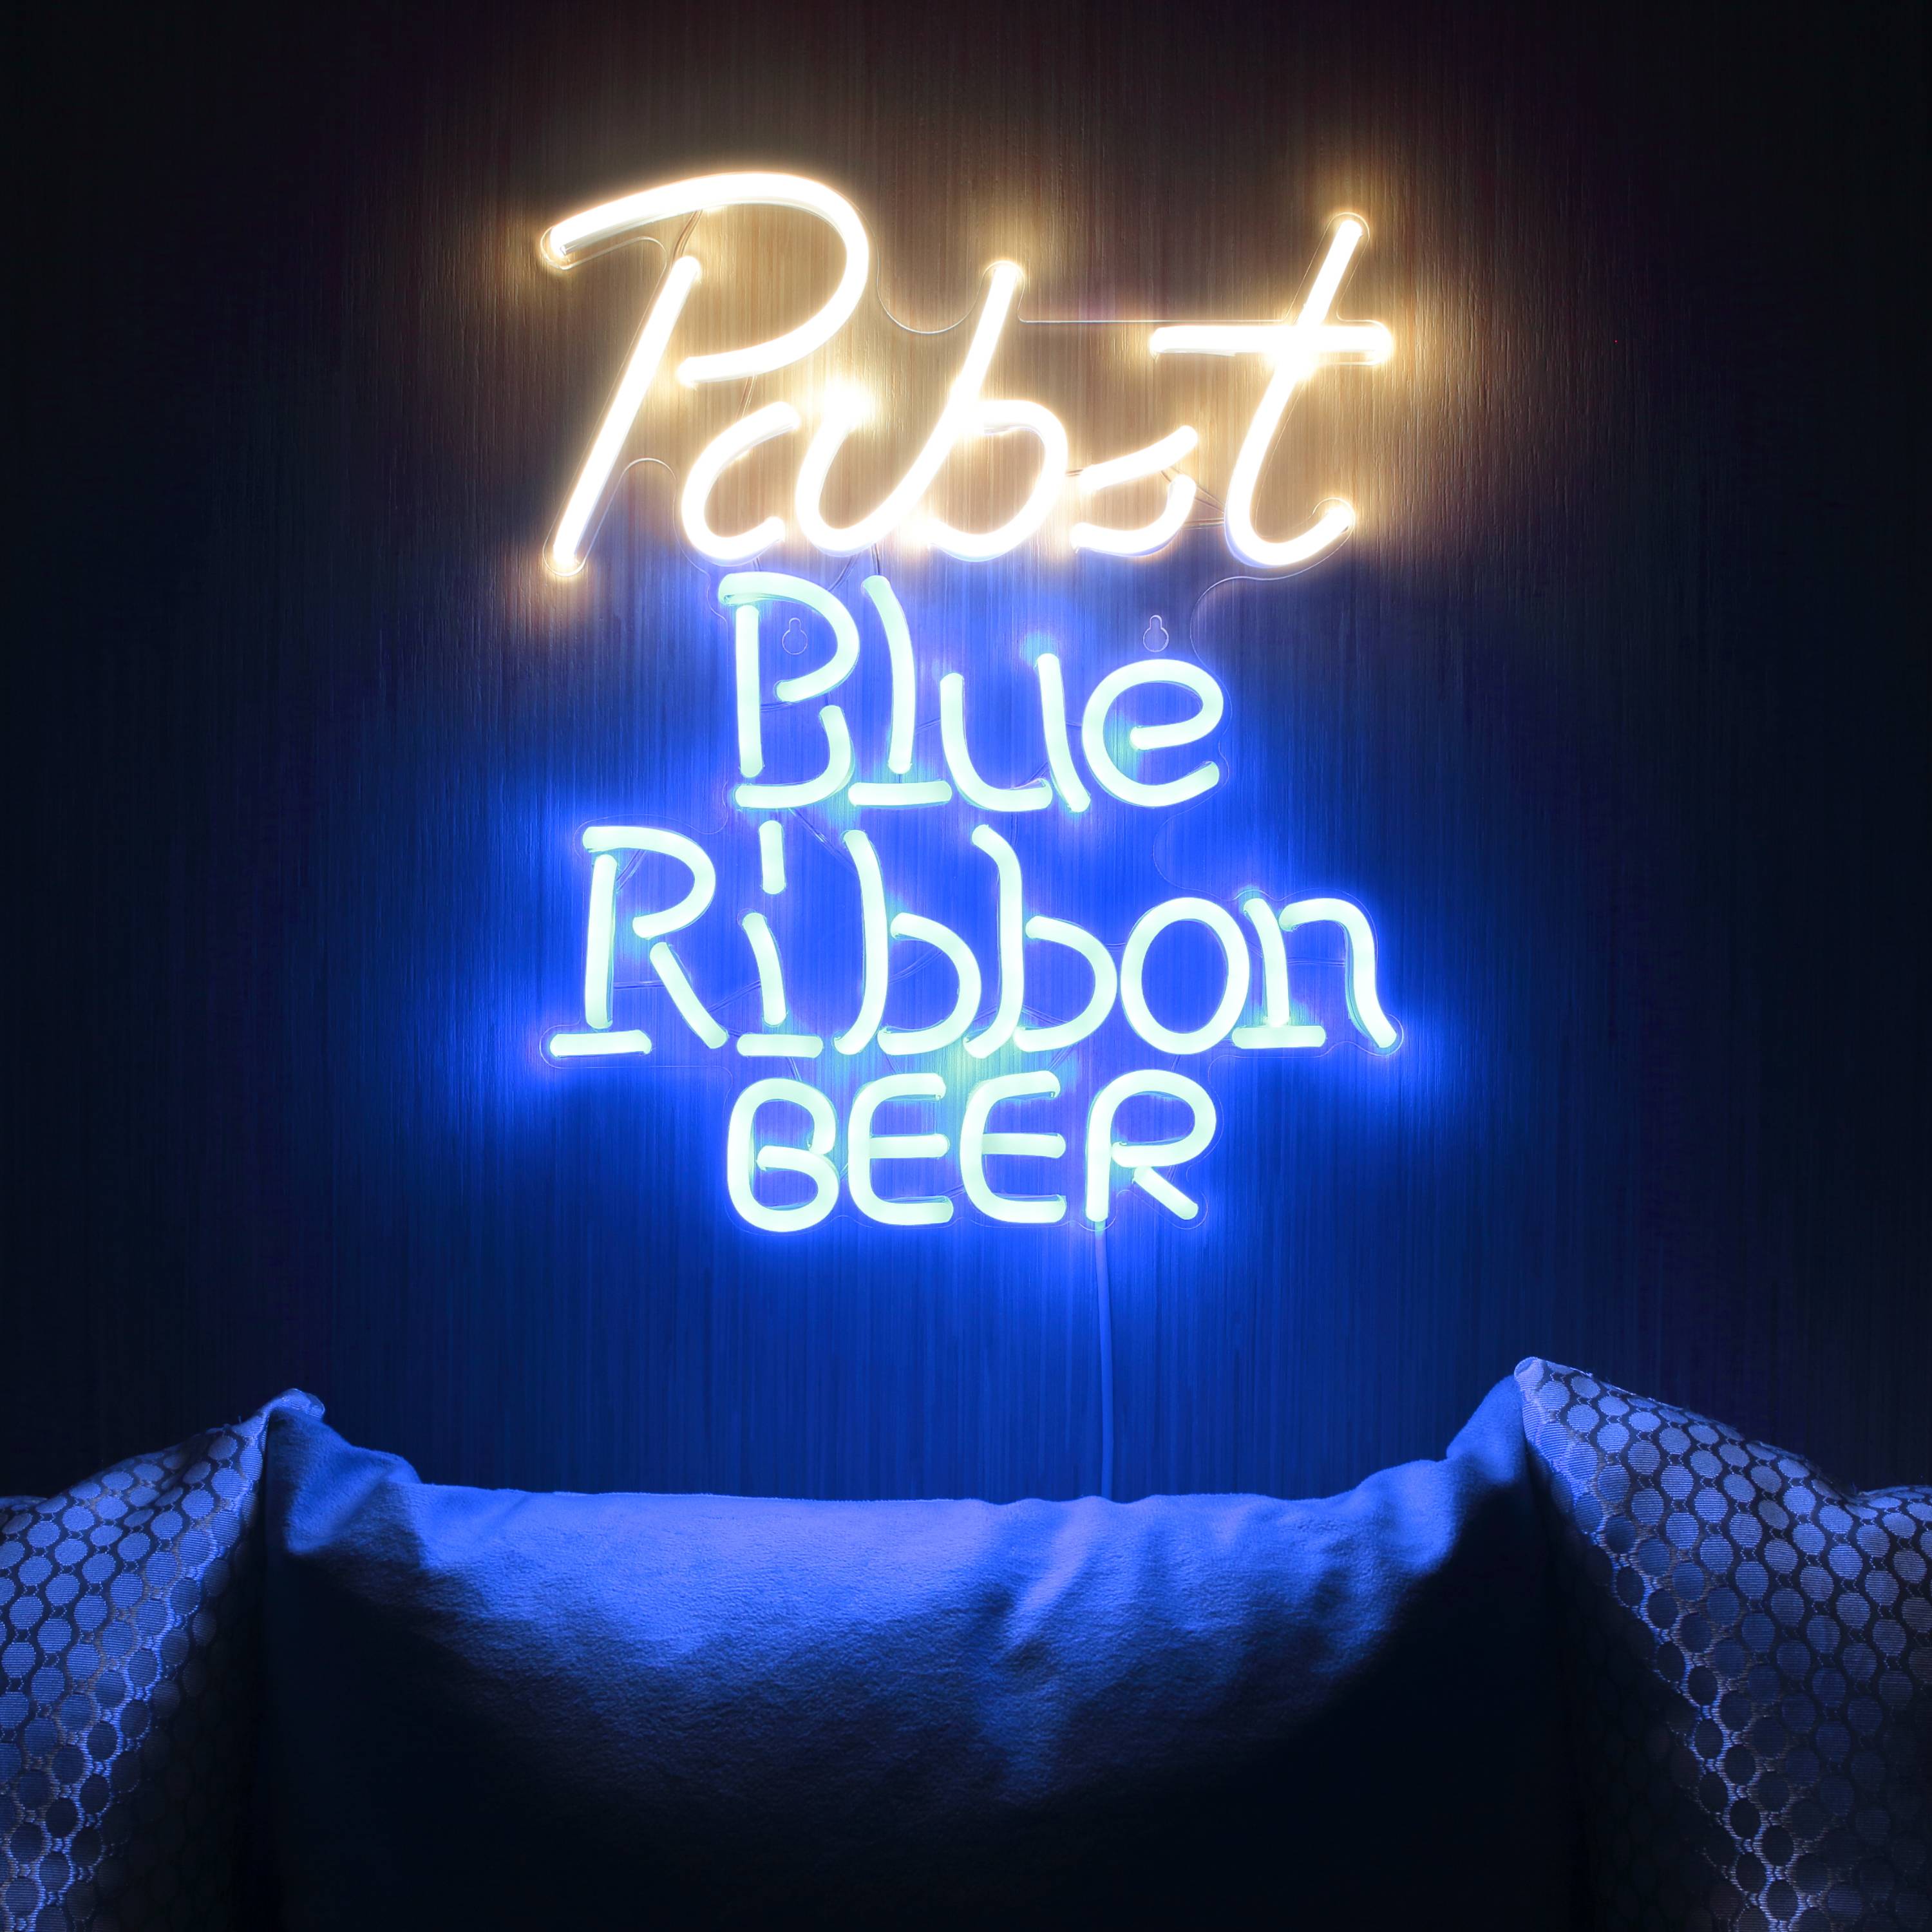 Pabst Blue Ribbon Beer Large Flex Neon LED Sign